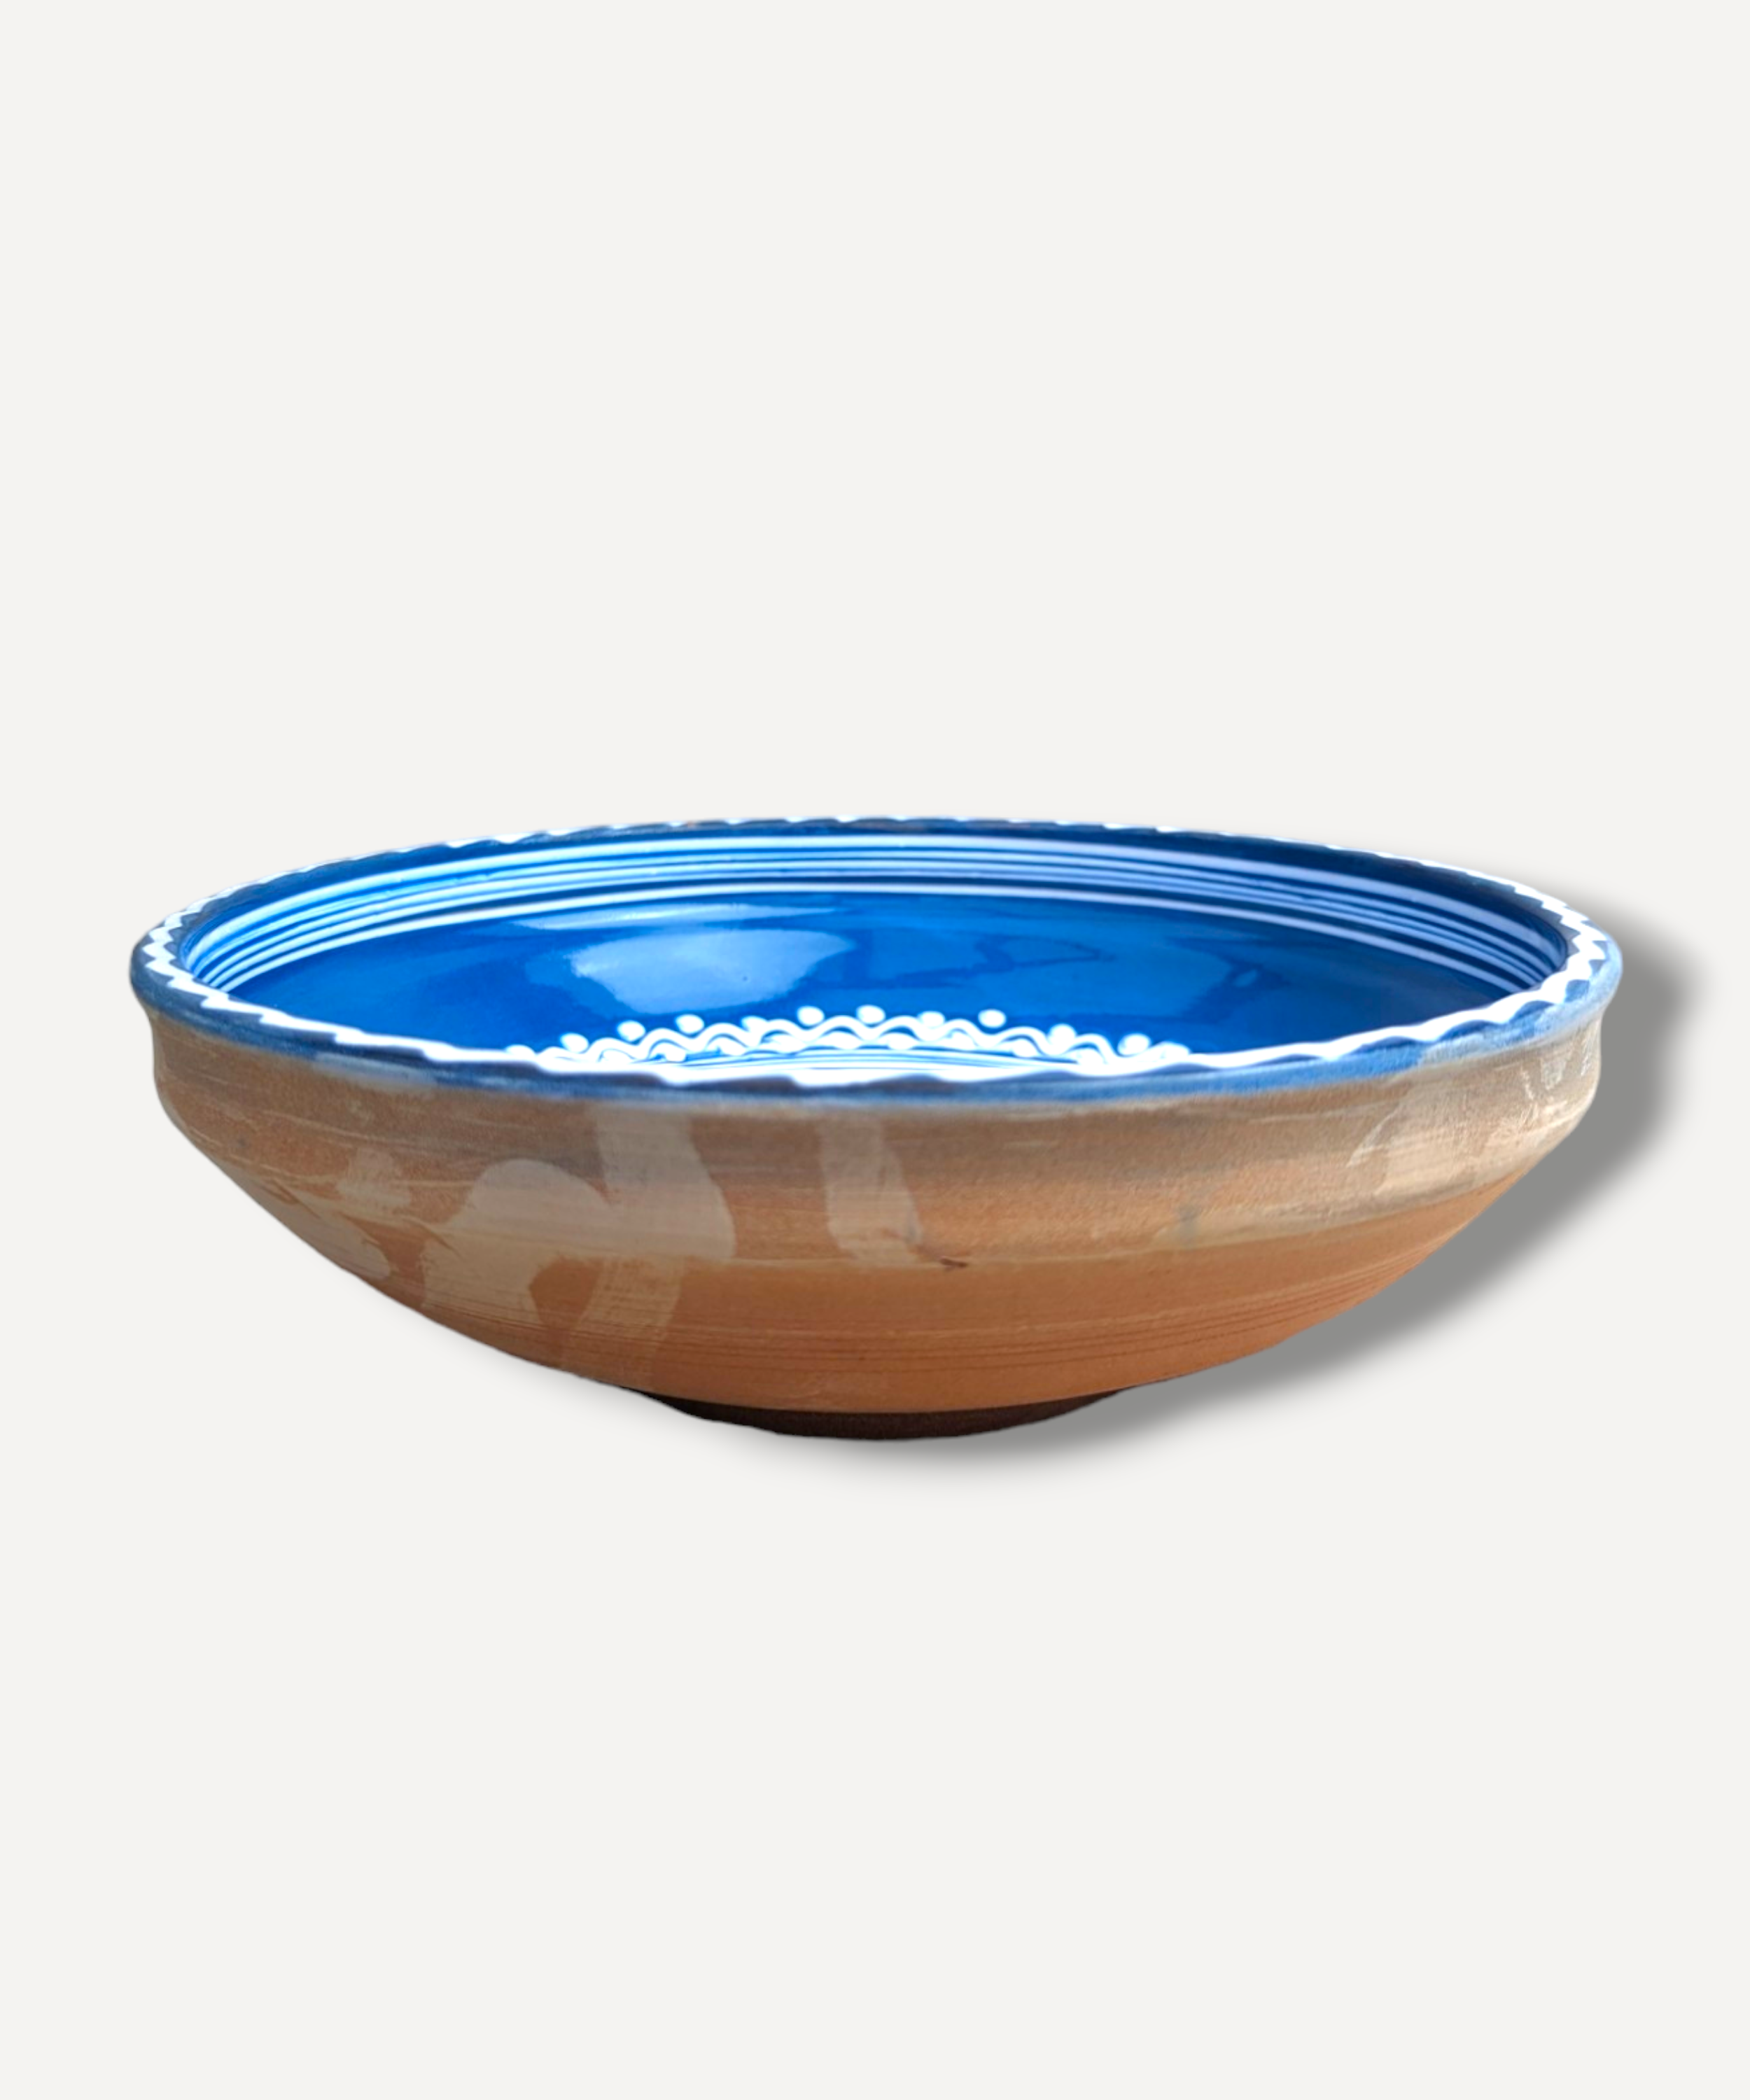 Cobalt - Fruit Bowl. I